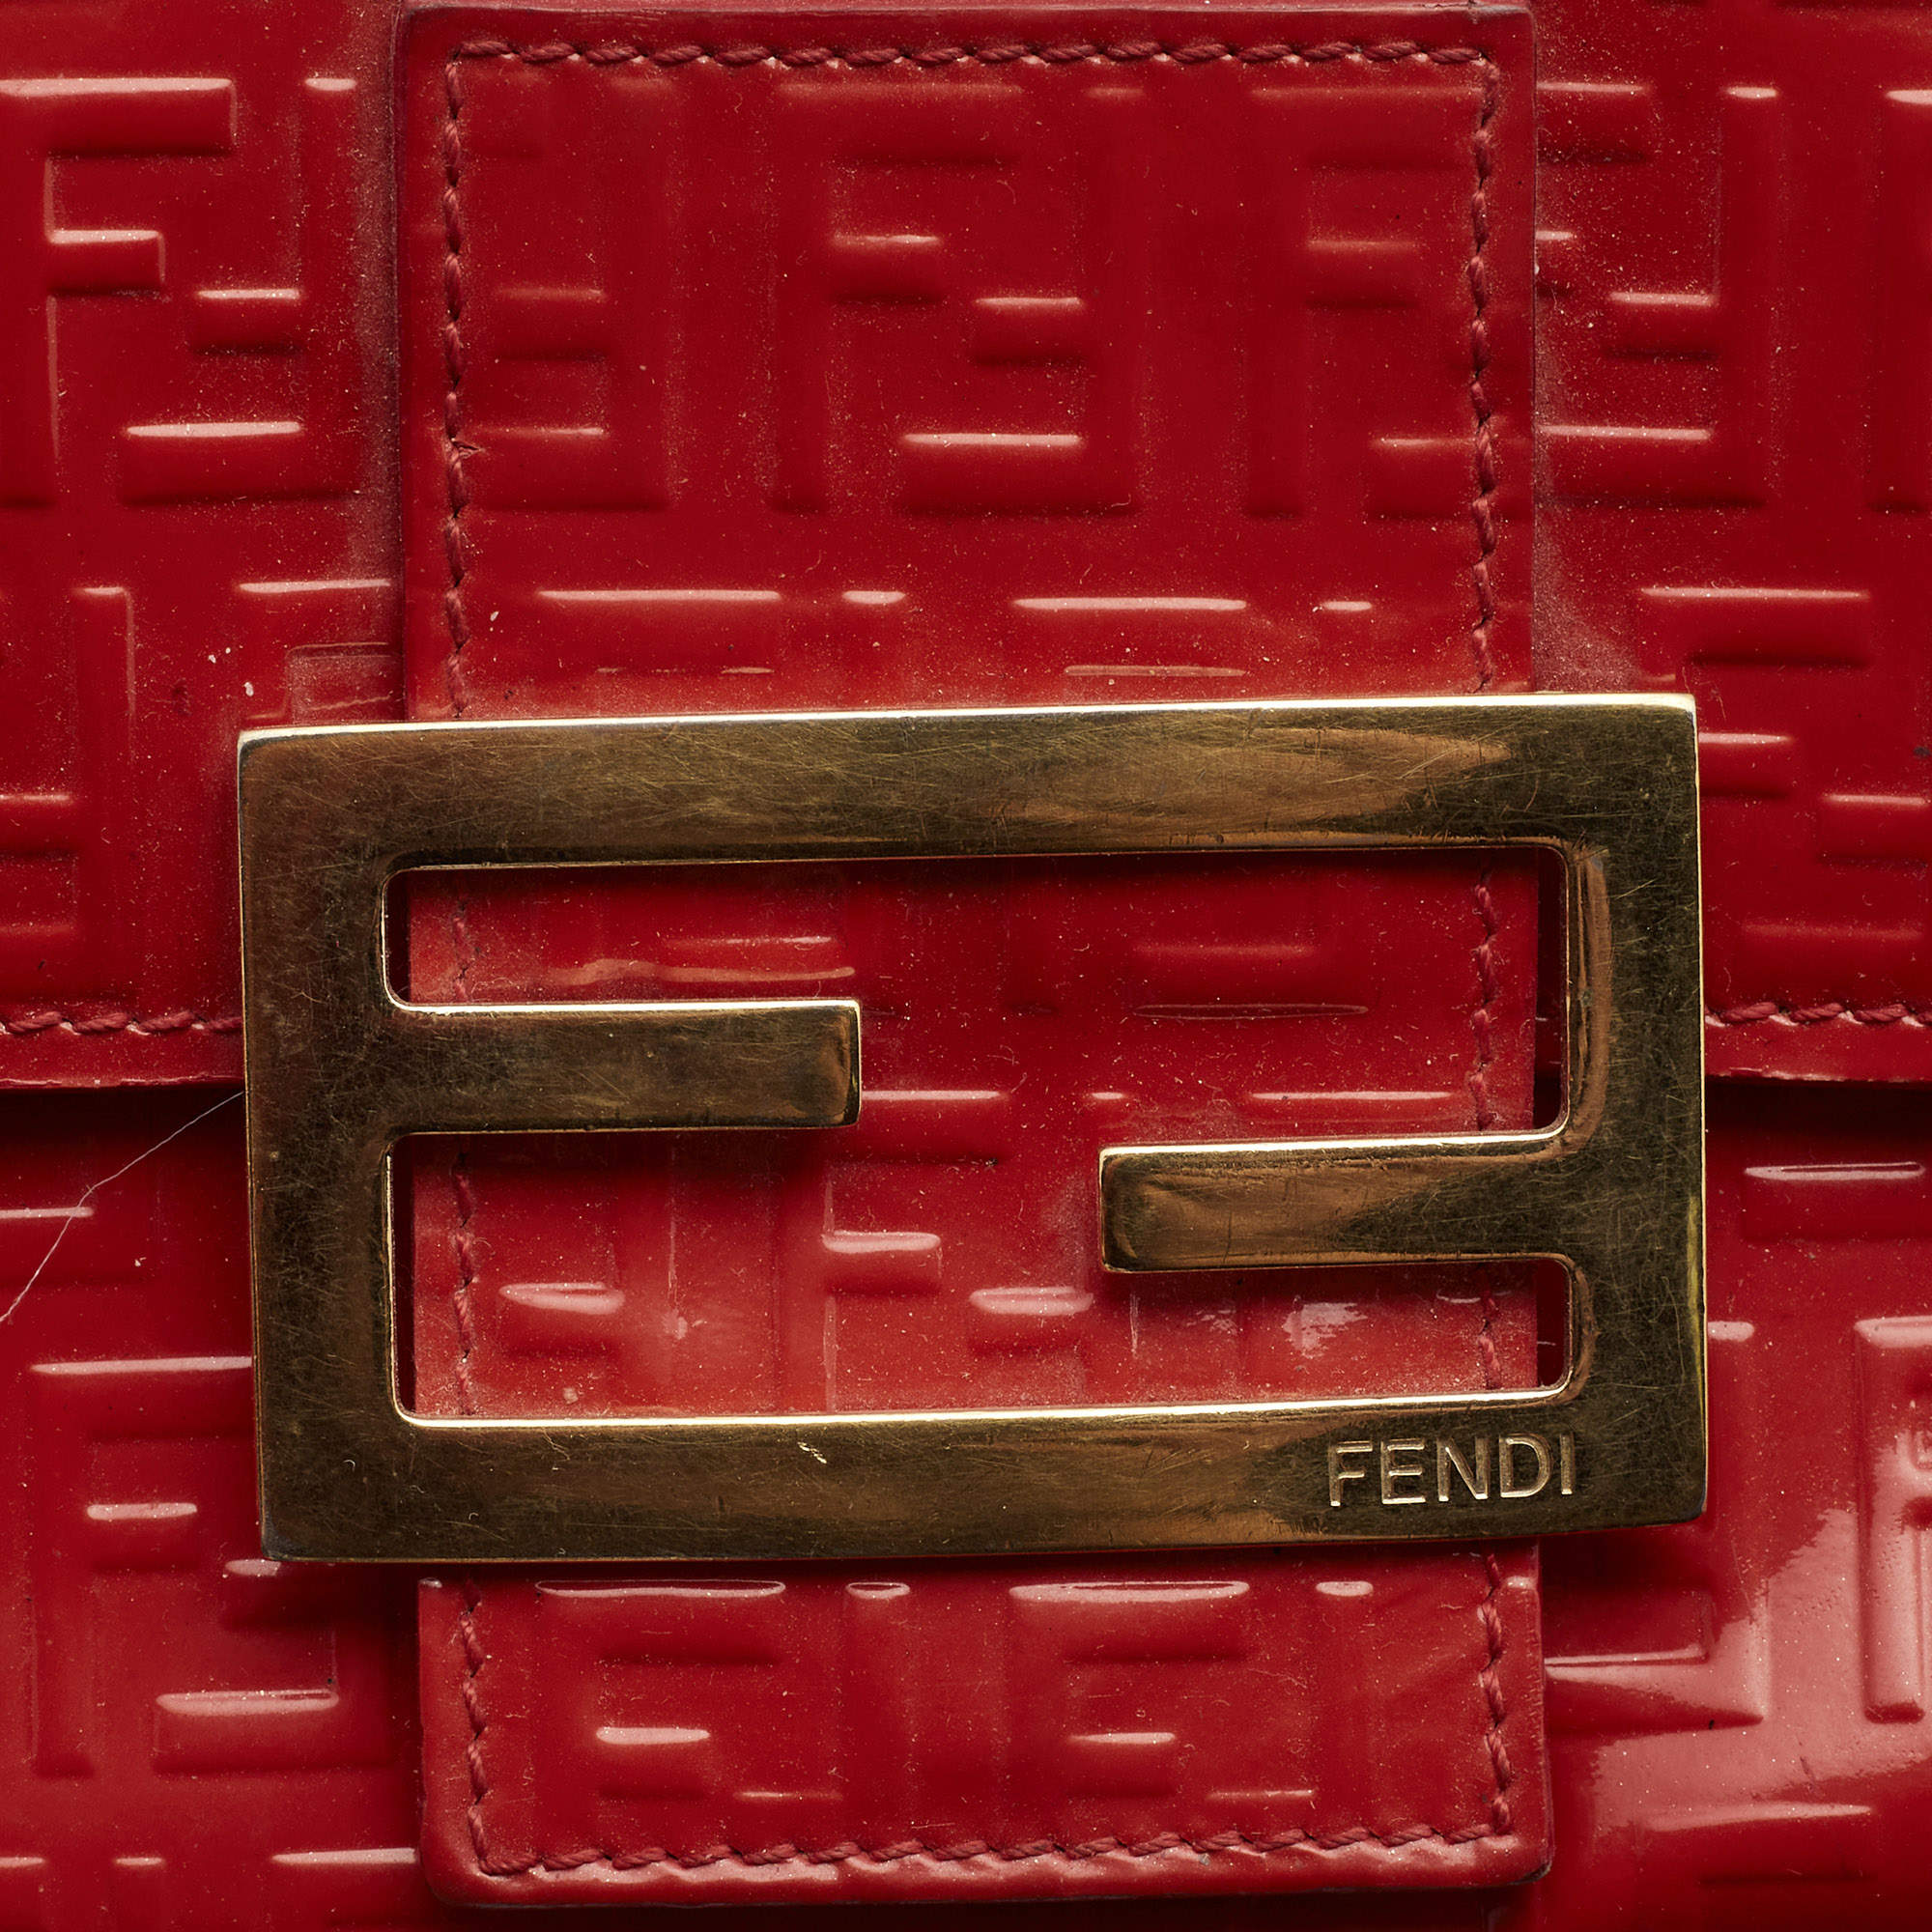 Fendi Wallet - Classic Continental 🖤 #fashion #outfit #fendi #fyp #c